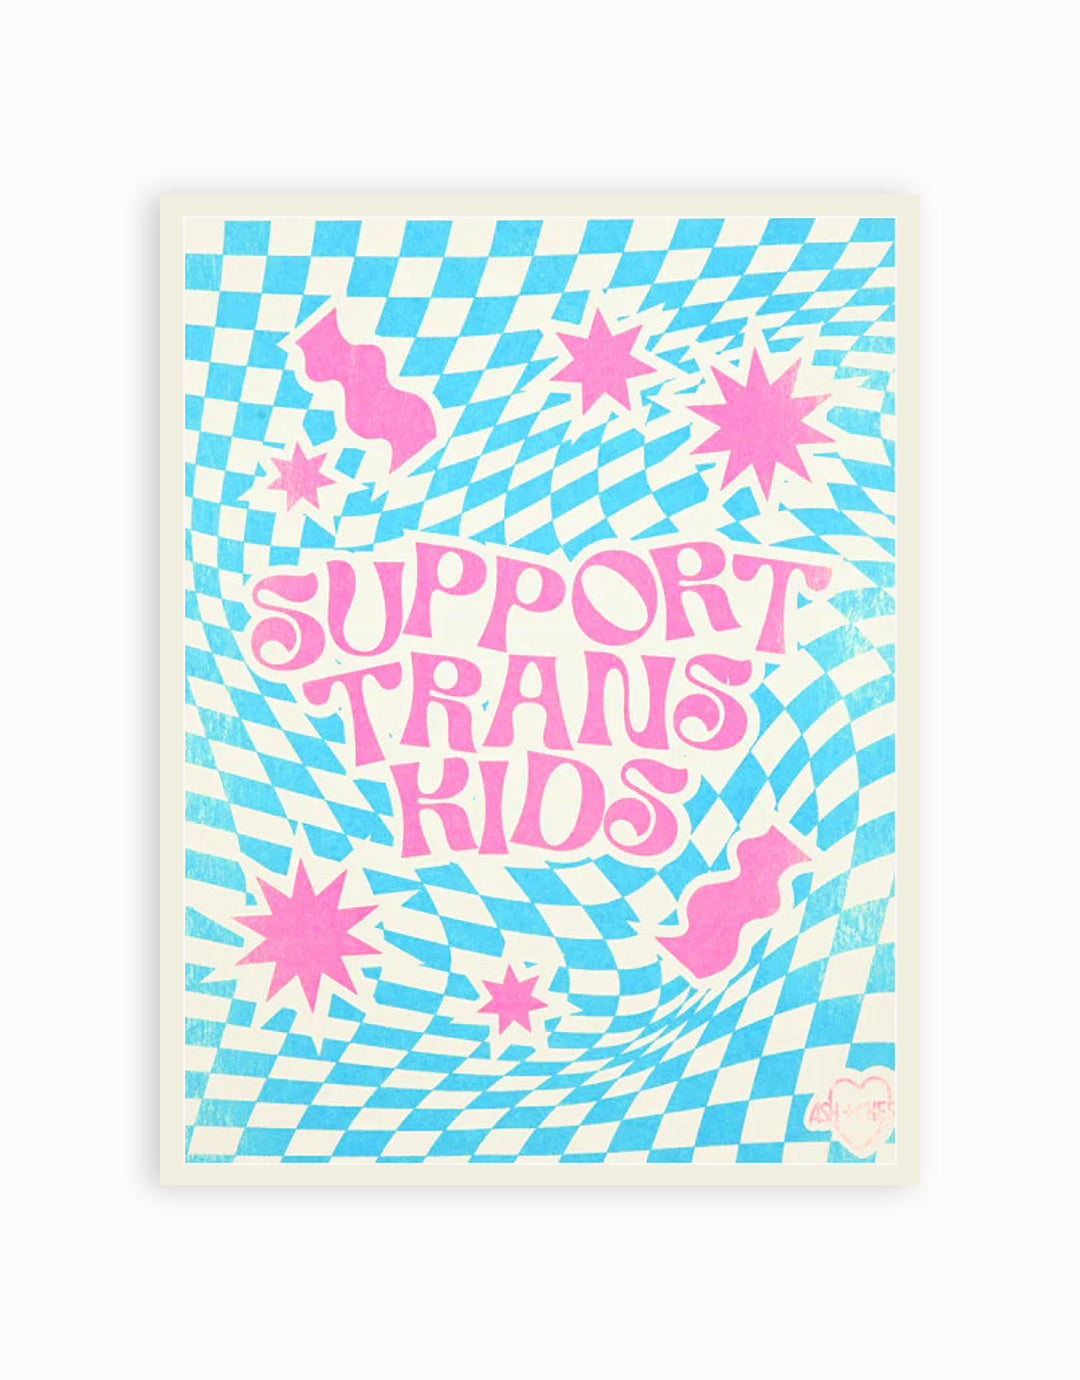 Support Trans Kids Print